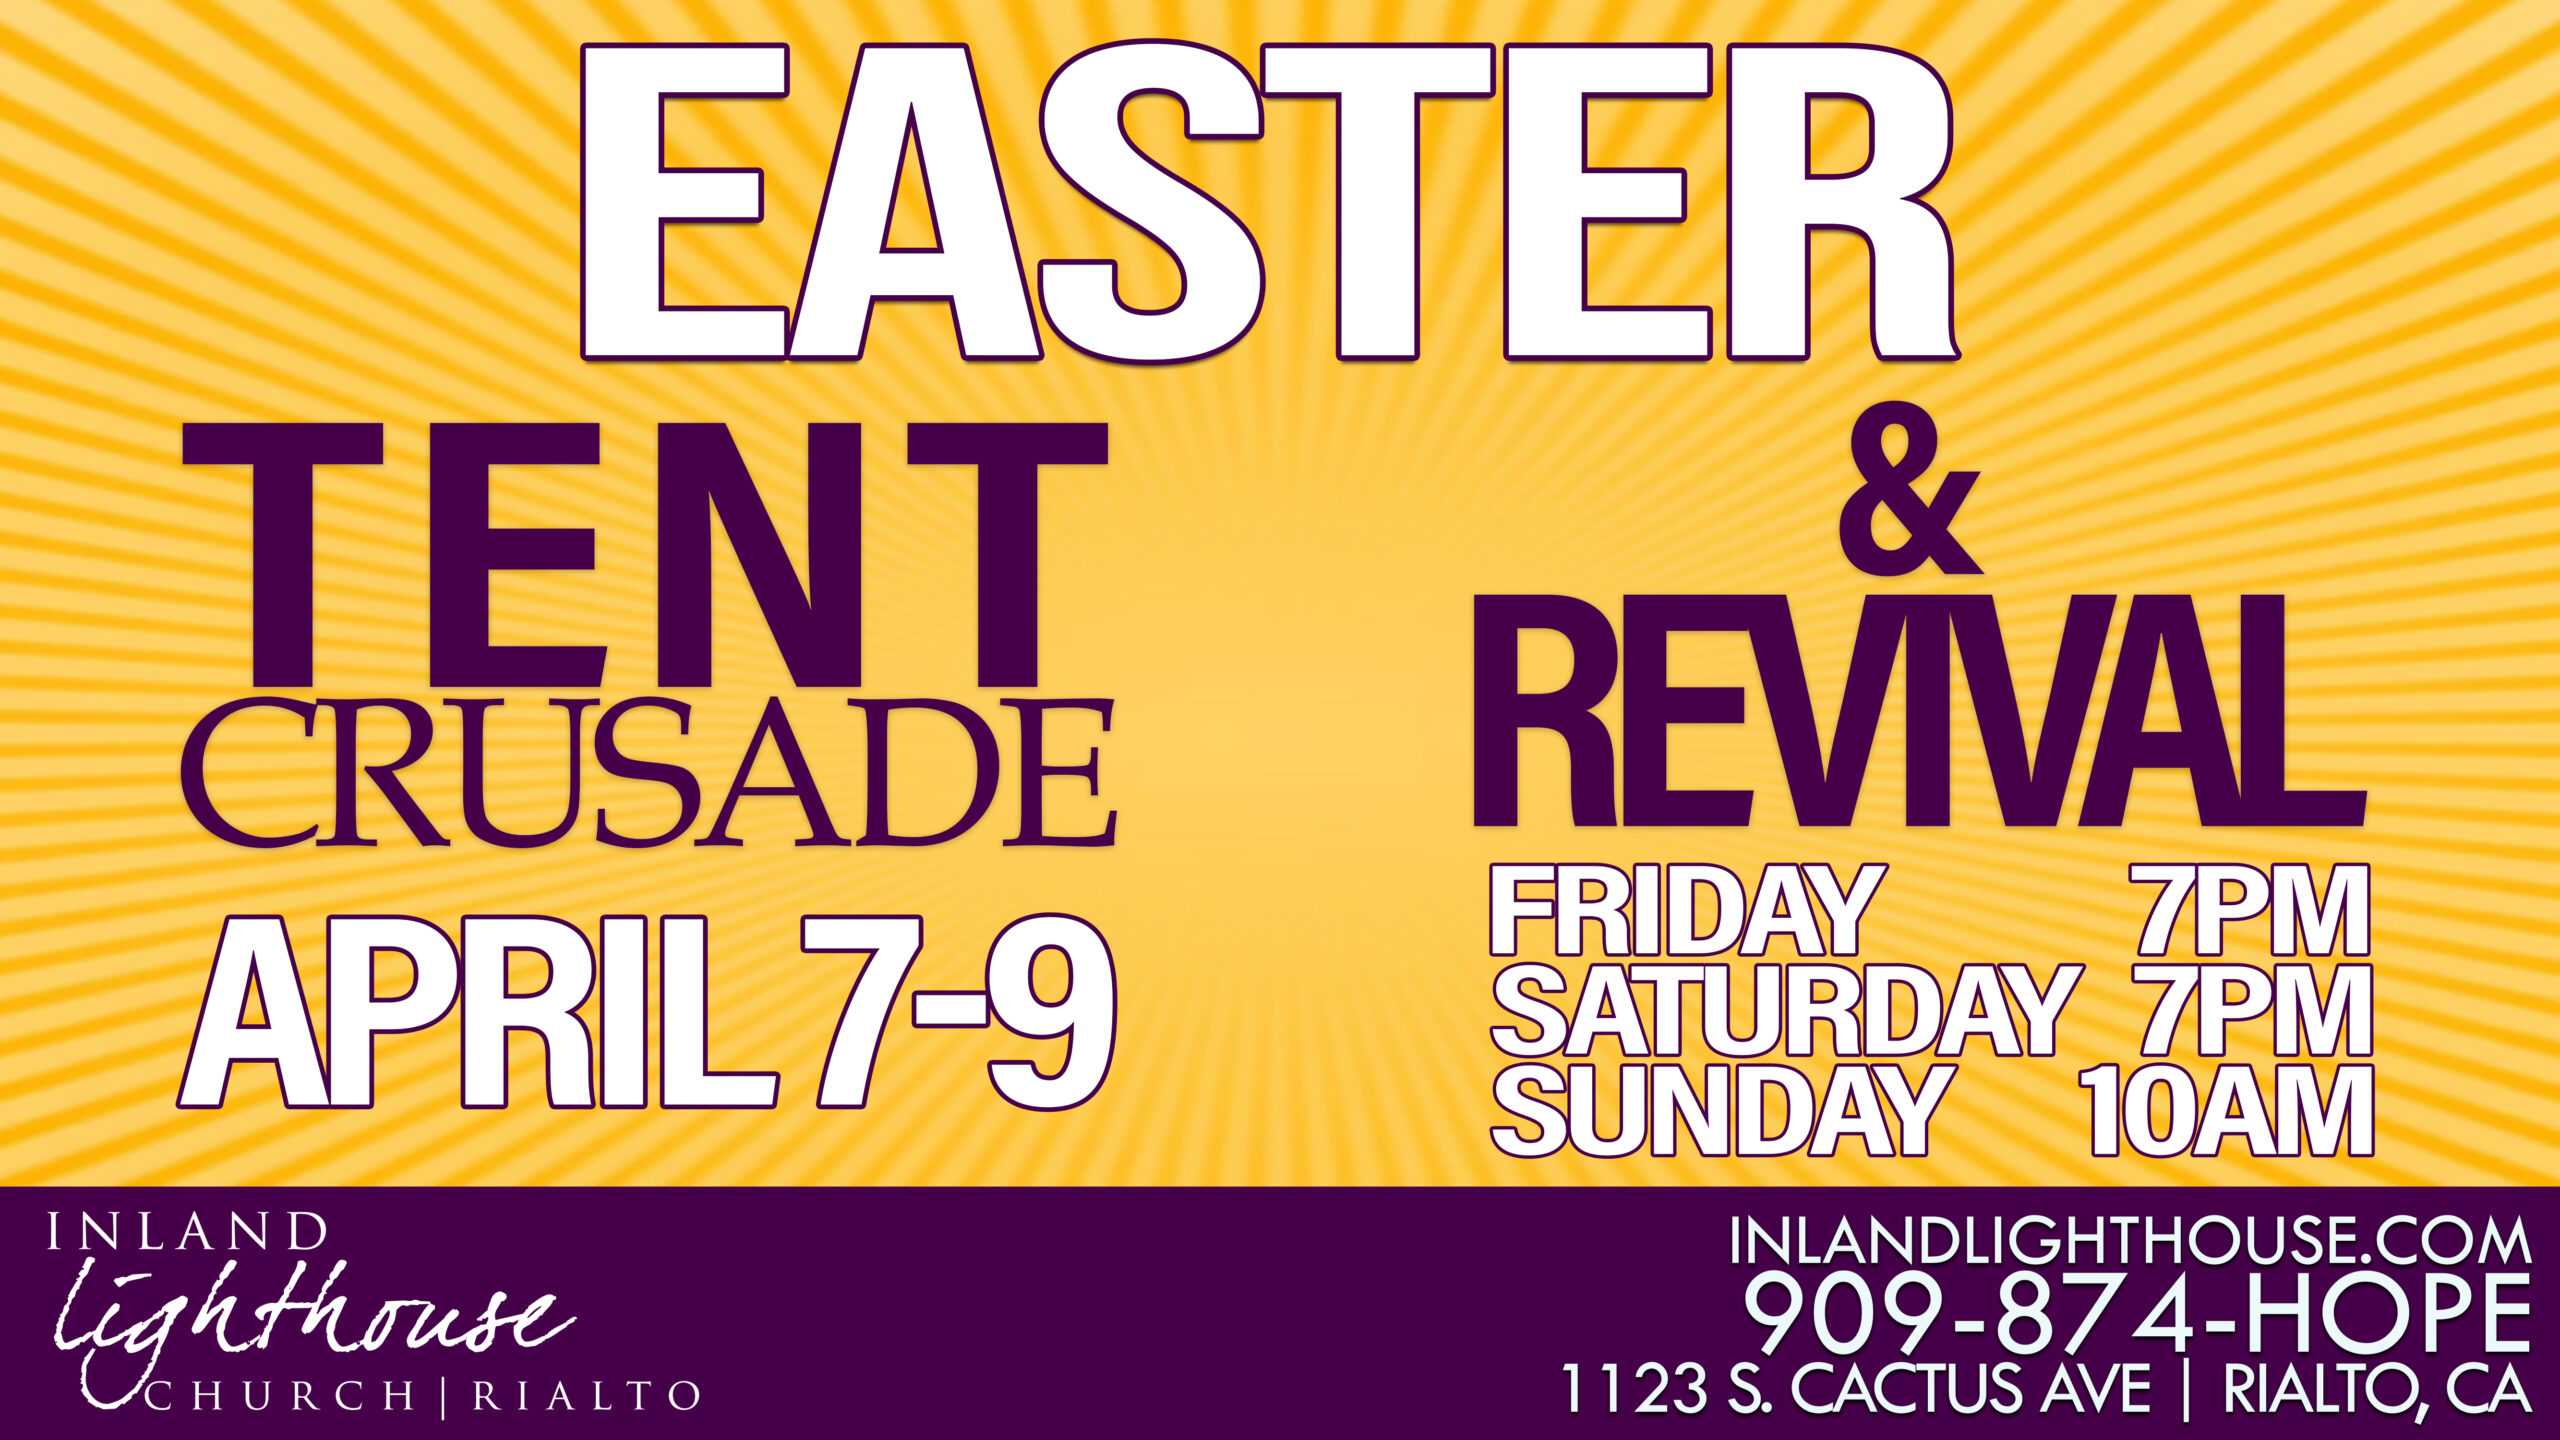 Easter Tent Crusade & Revival | April 7-9 and beyond!